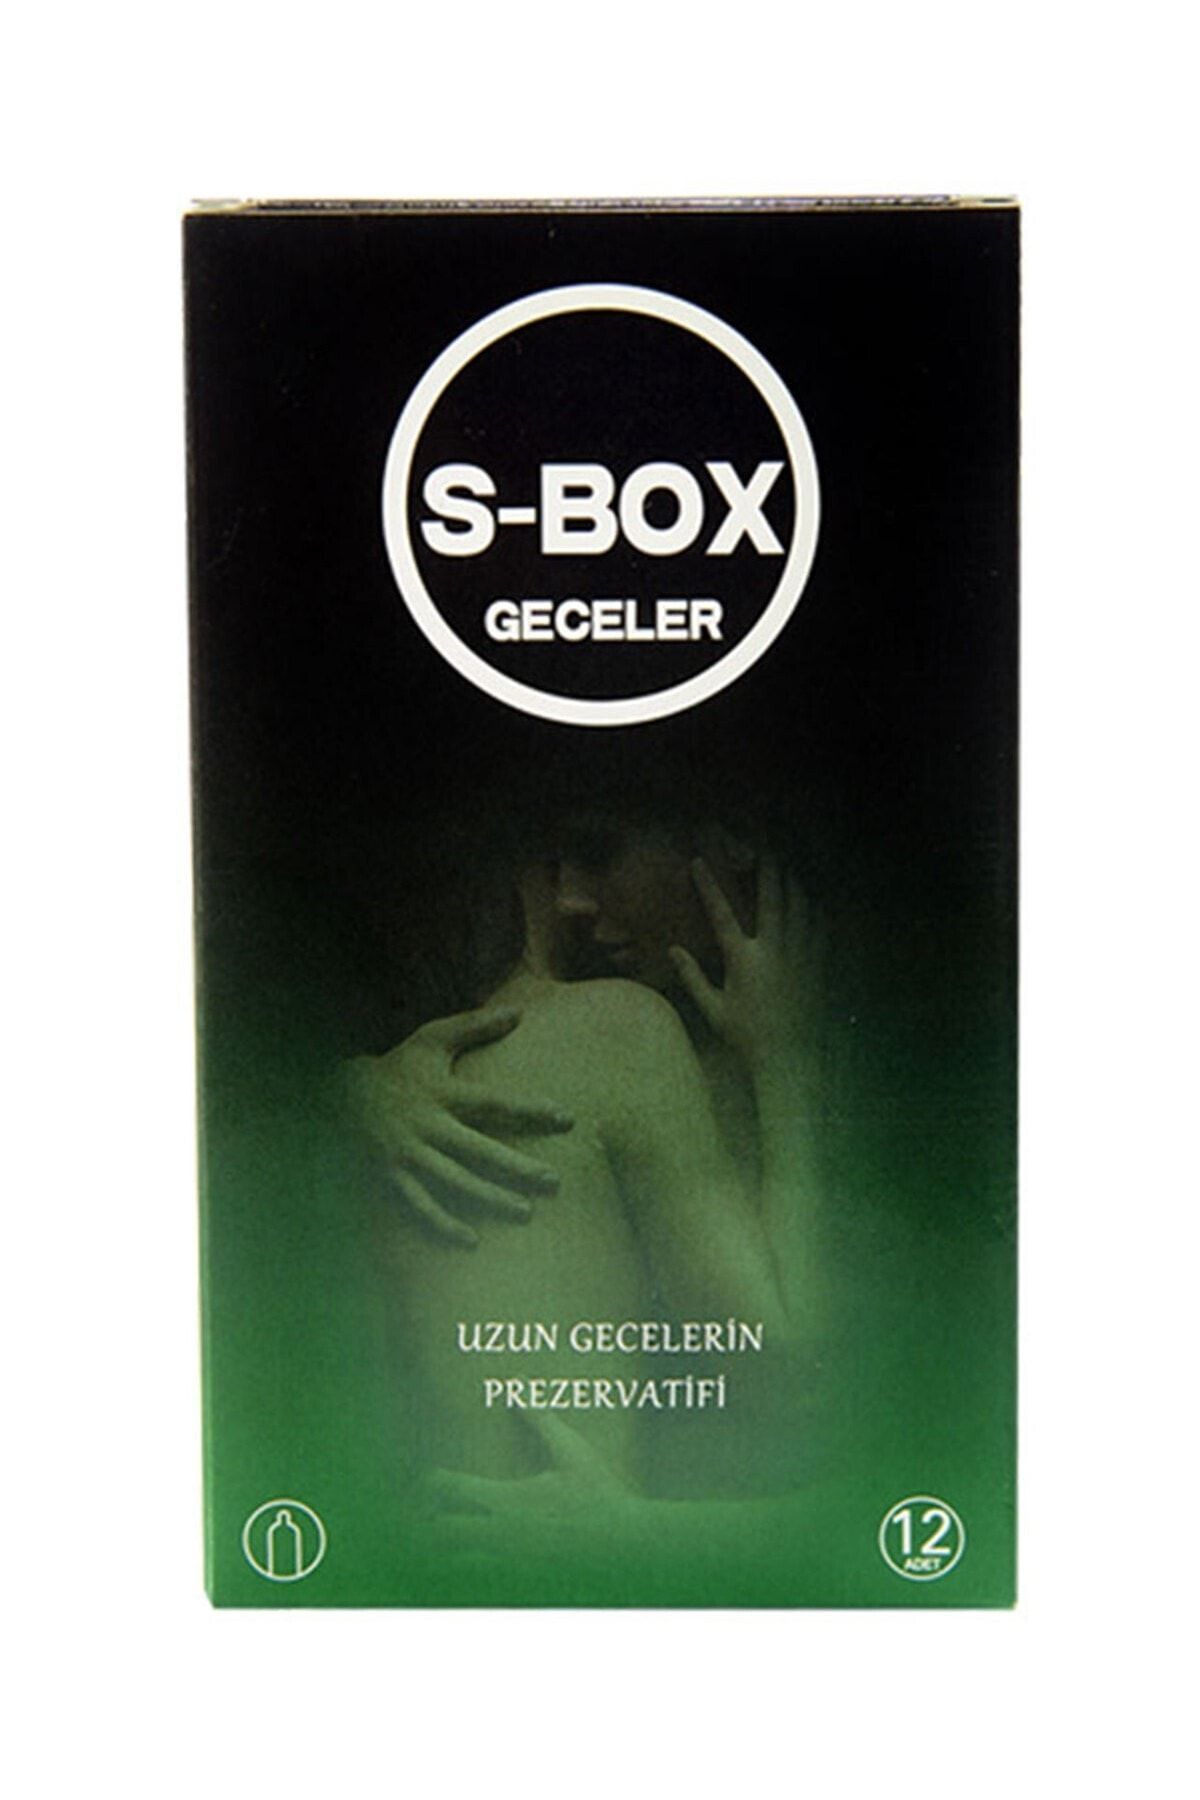 S-Box Geceler Prezervatif 12'li 6922954820685